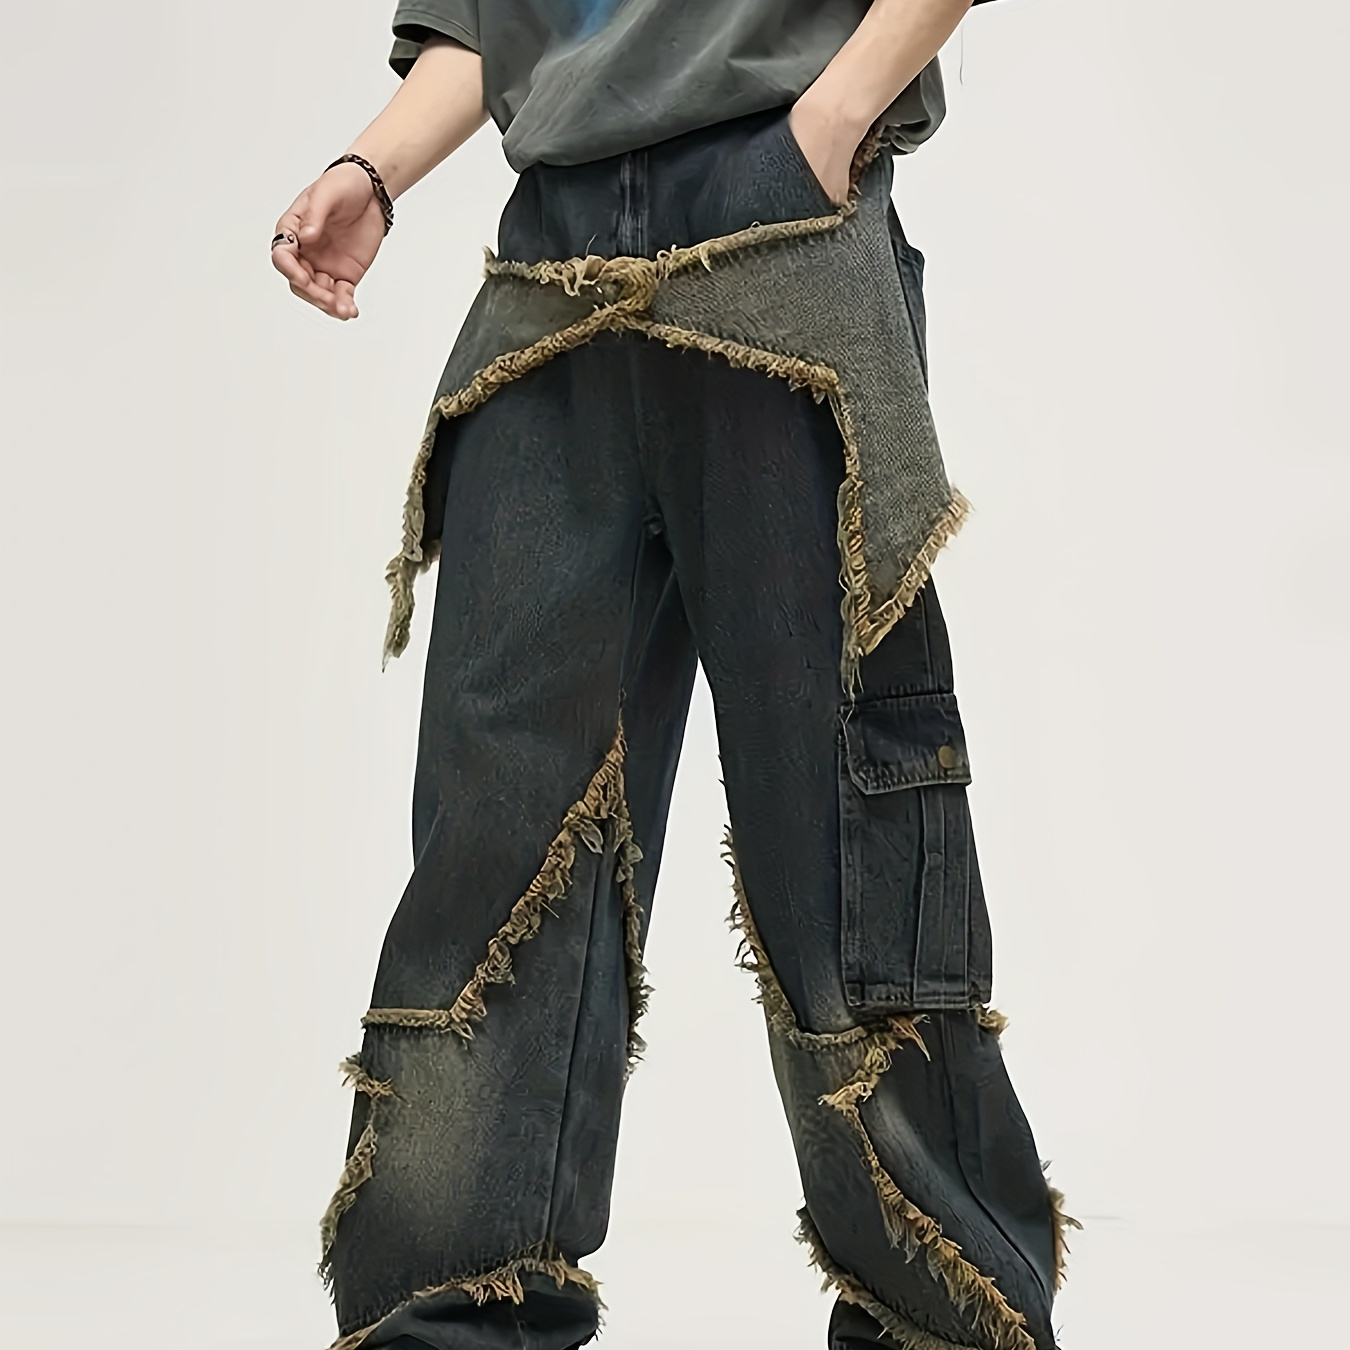 

Yasuyuan Men's Casual Loose Fit Jeans, Street Style Raw Trim Denim Pants Baggy Jeans